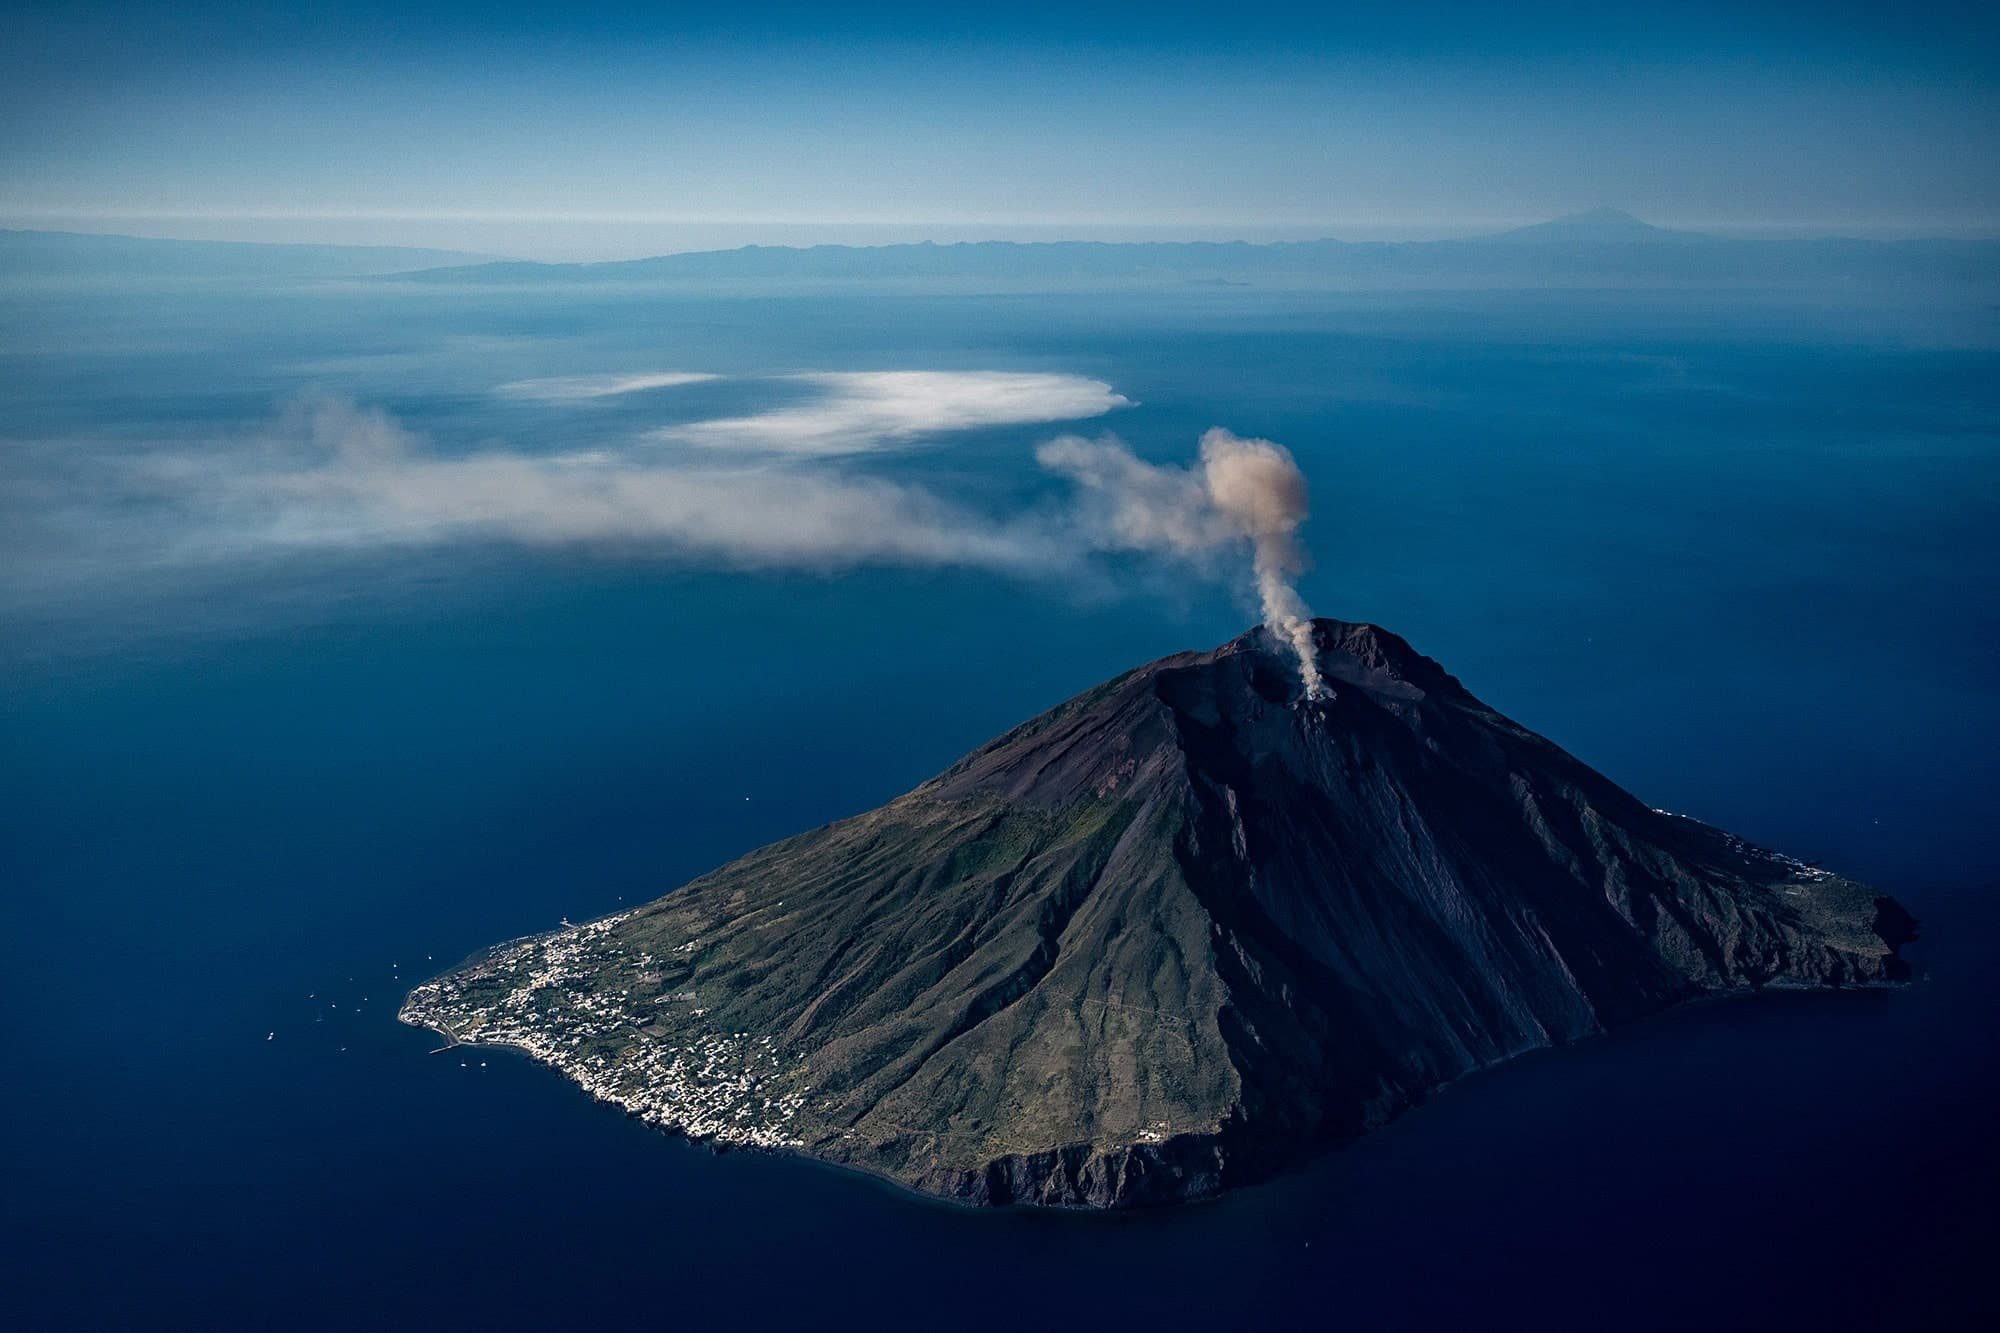 Volcano island. Остров вулкан Стромболи. Сицилия остров Стромболи. Вулкан Стромболи Сицилия. Везувий Этна Стромболи.